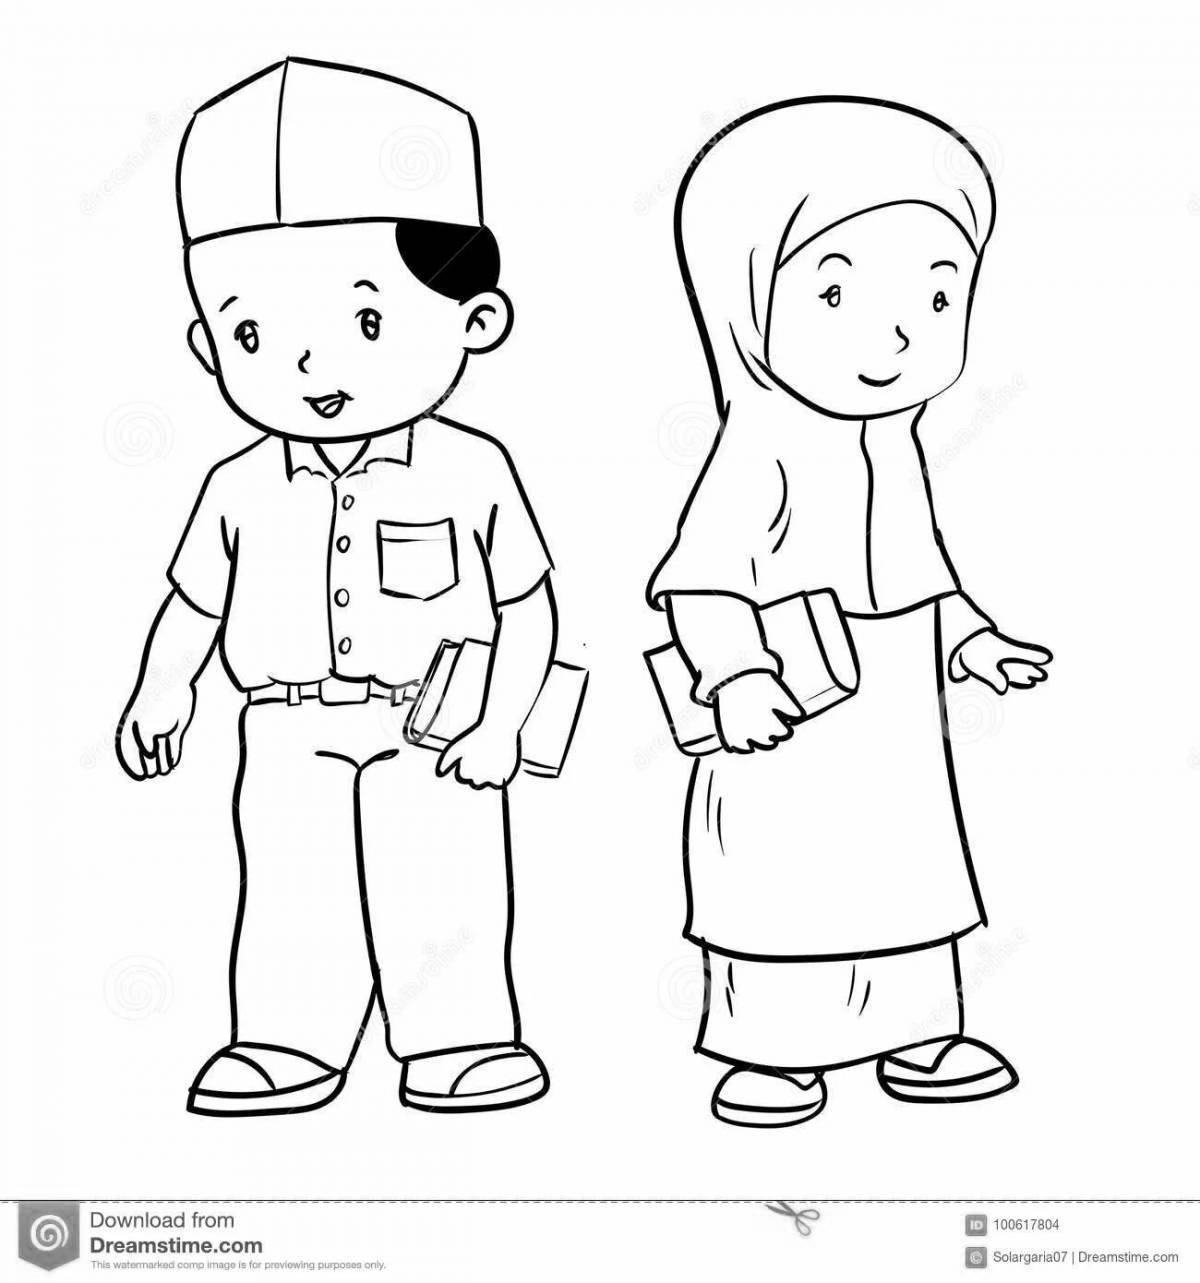 A fascinating Muslim family coloring book